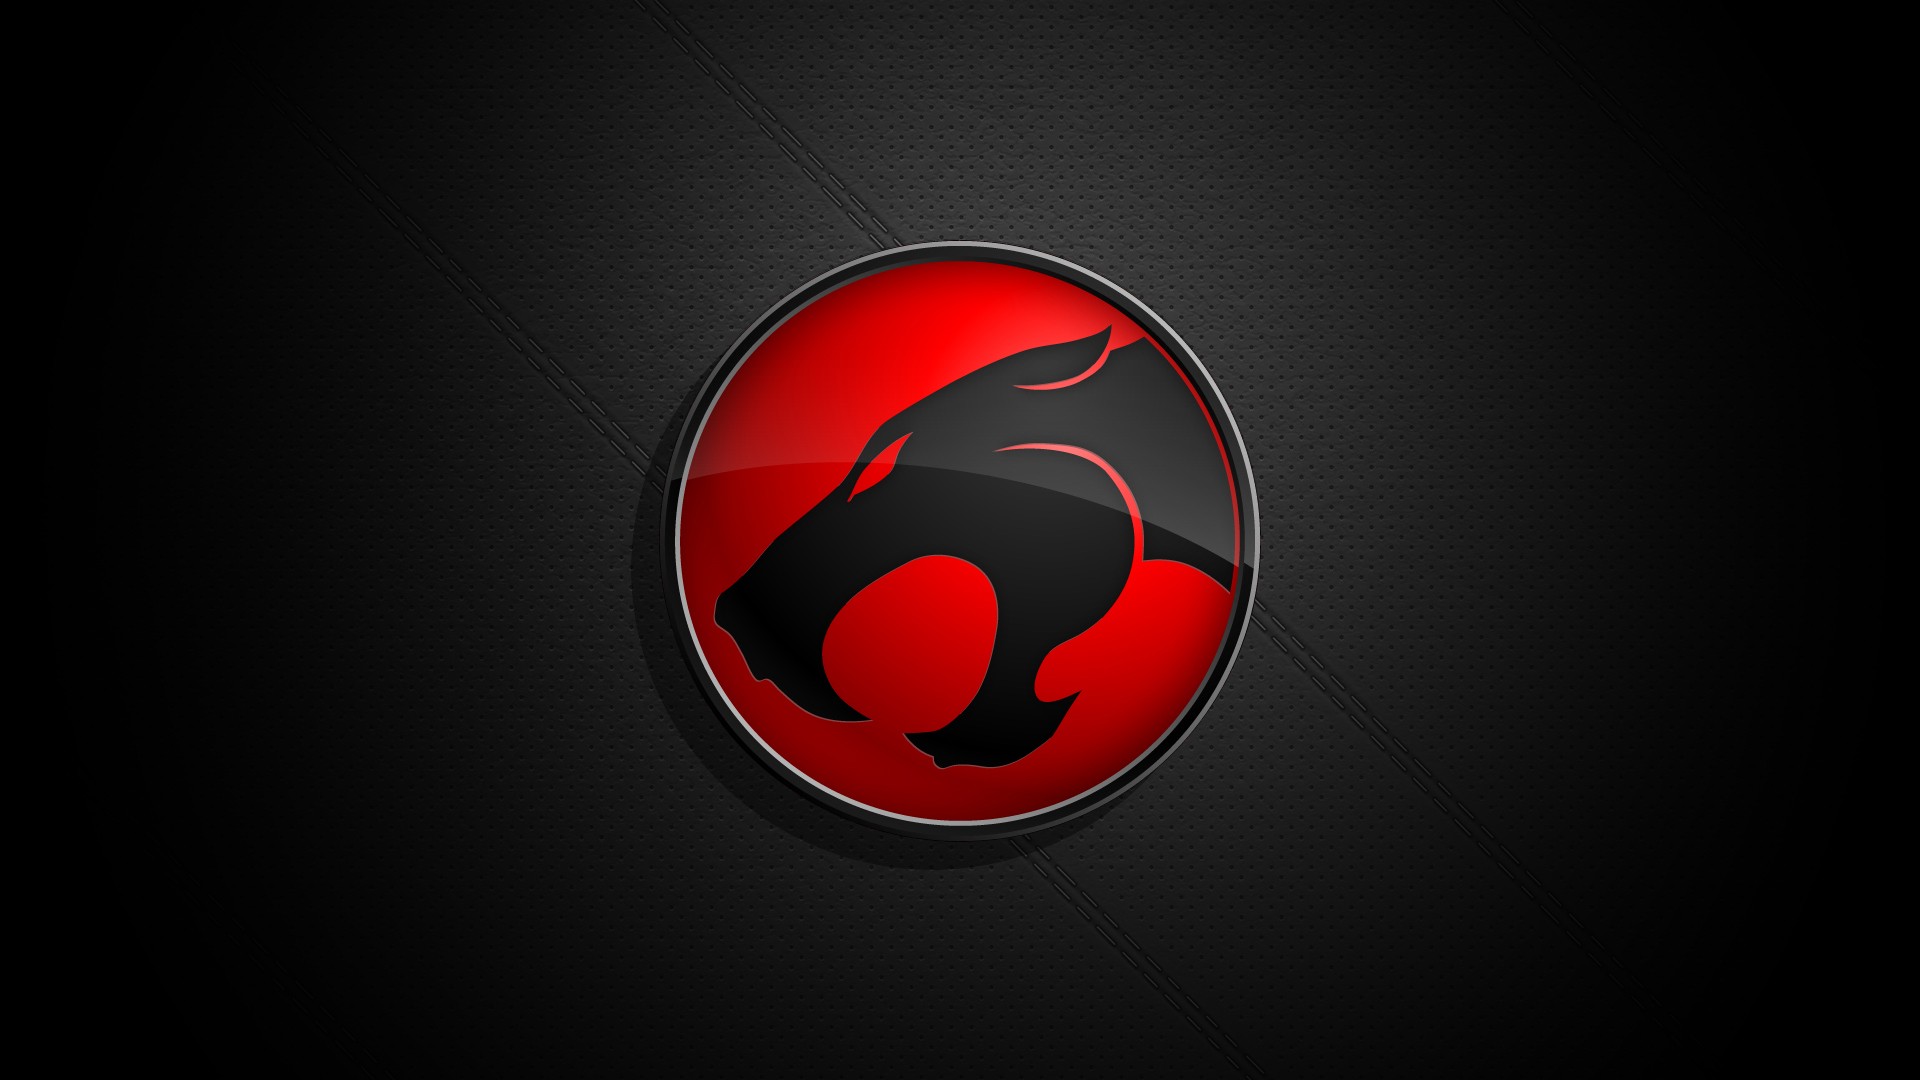 Thundercats logo images | danaspef.top